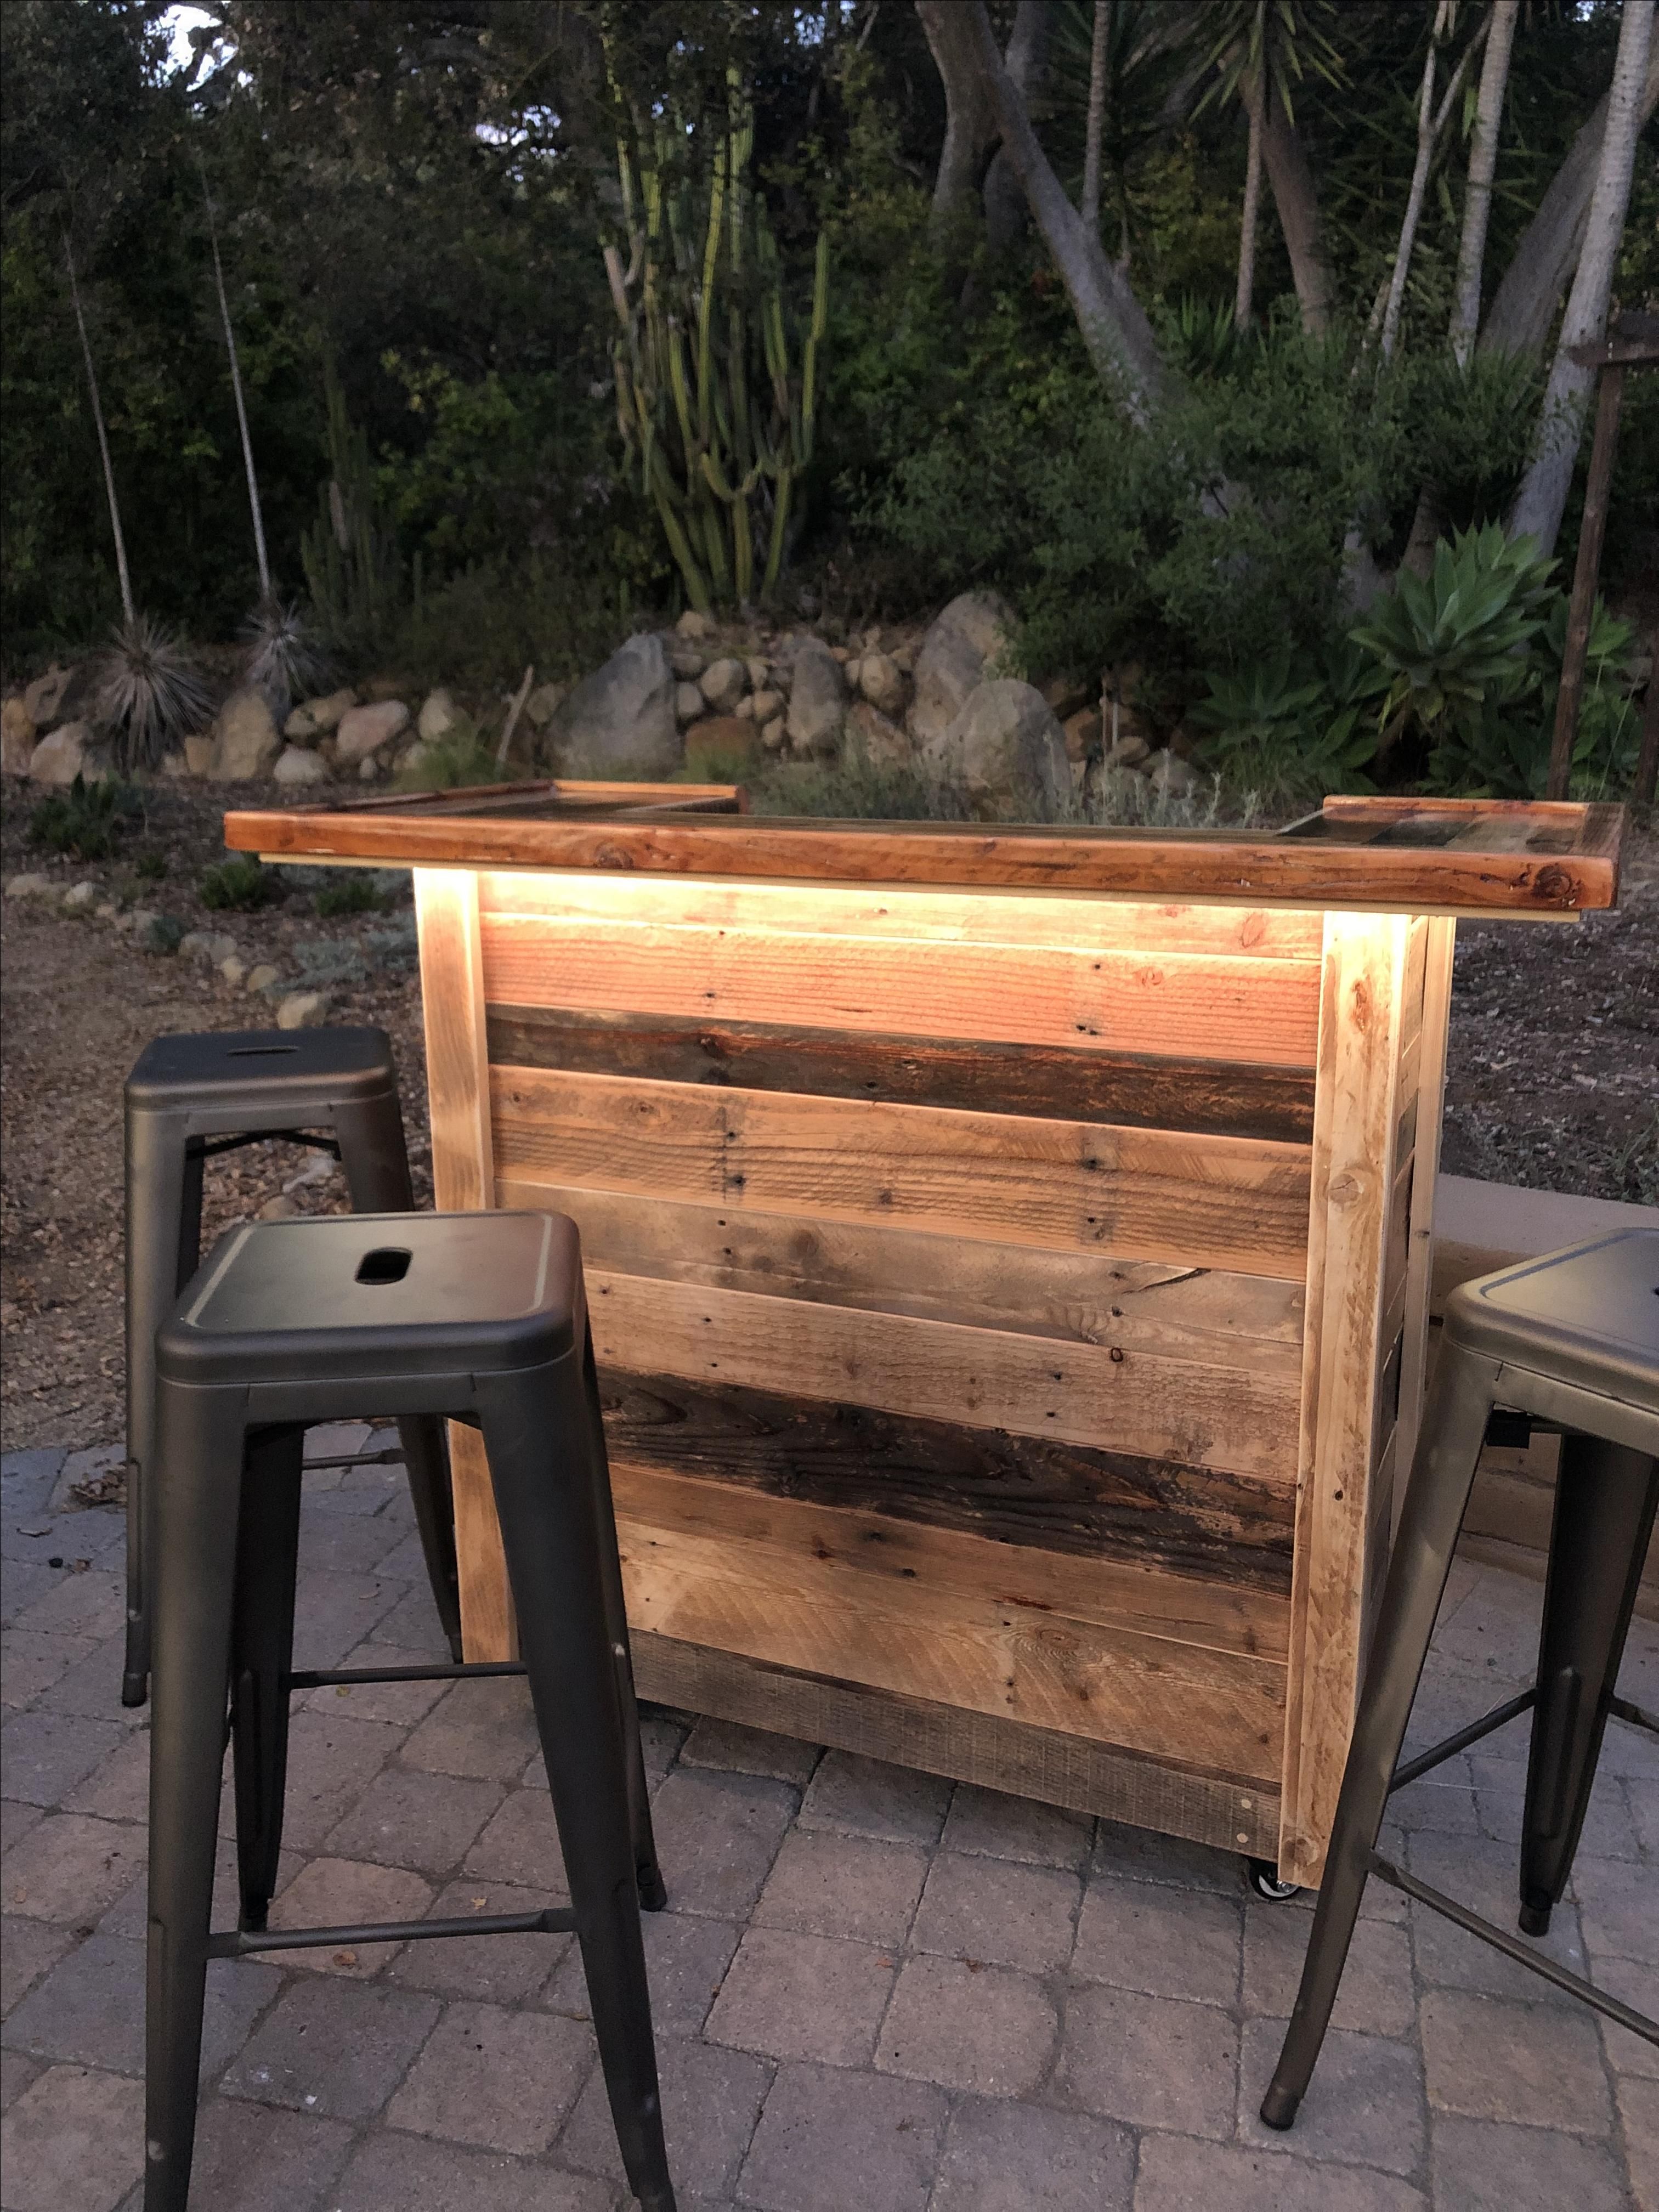 Custom Designed Wood Home Bar